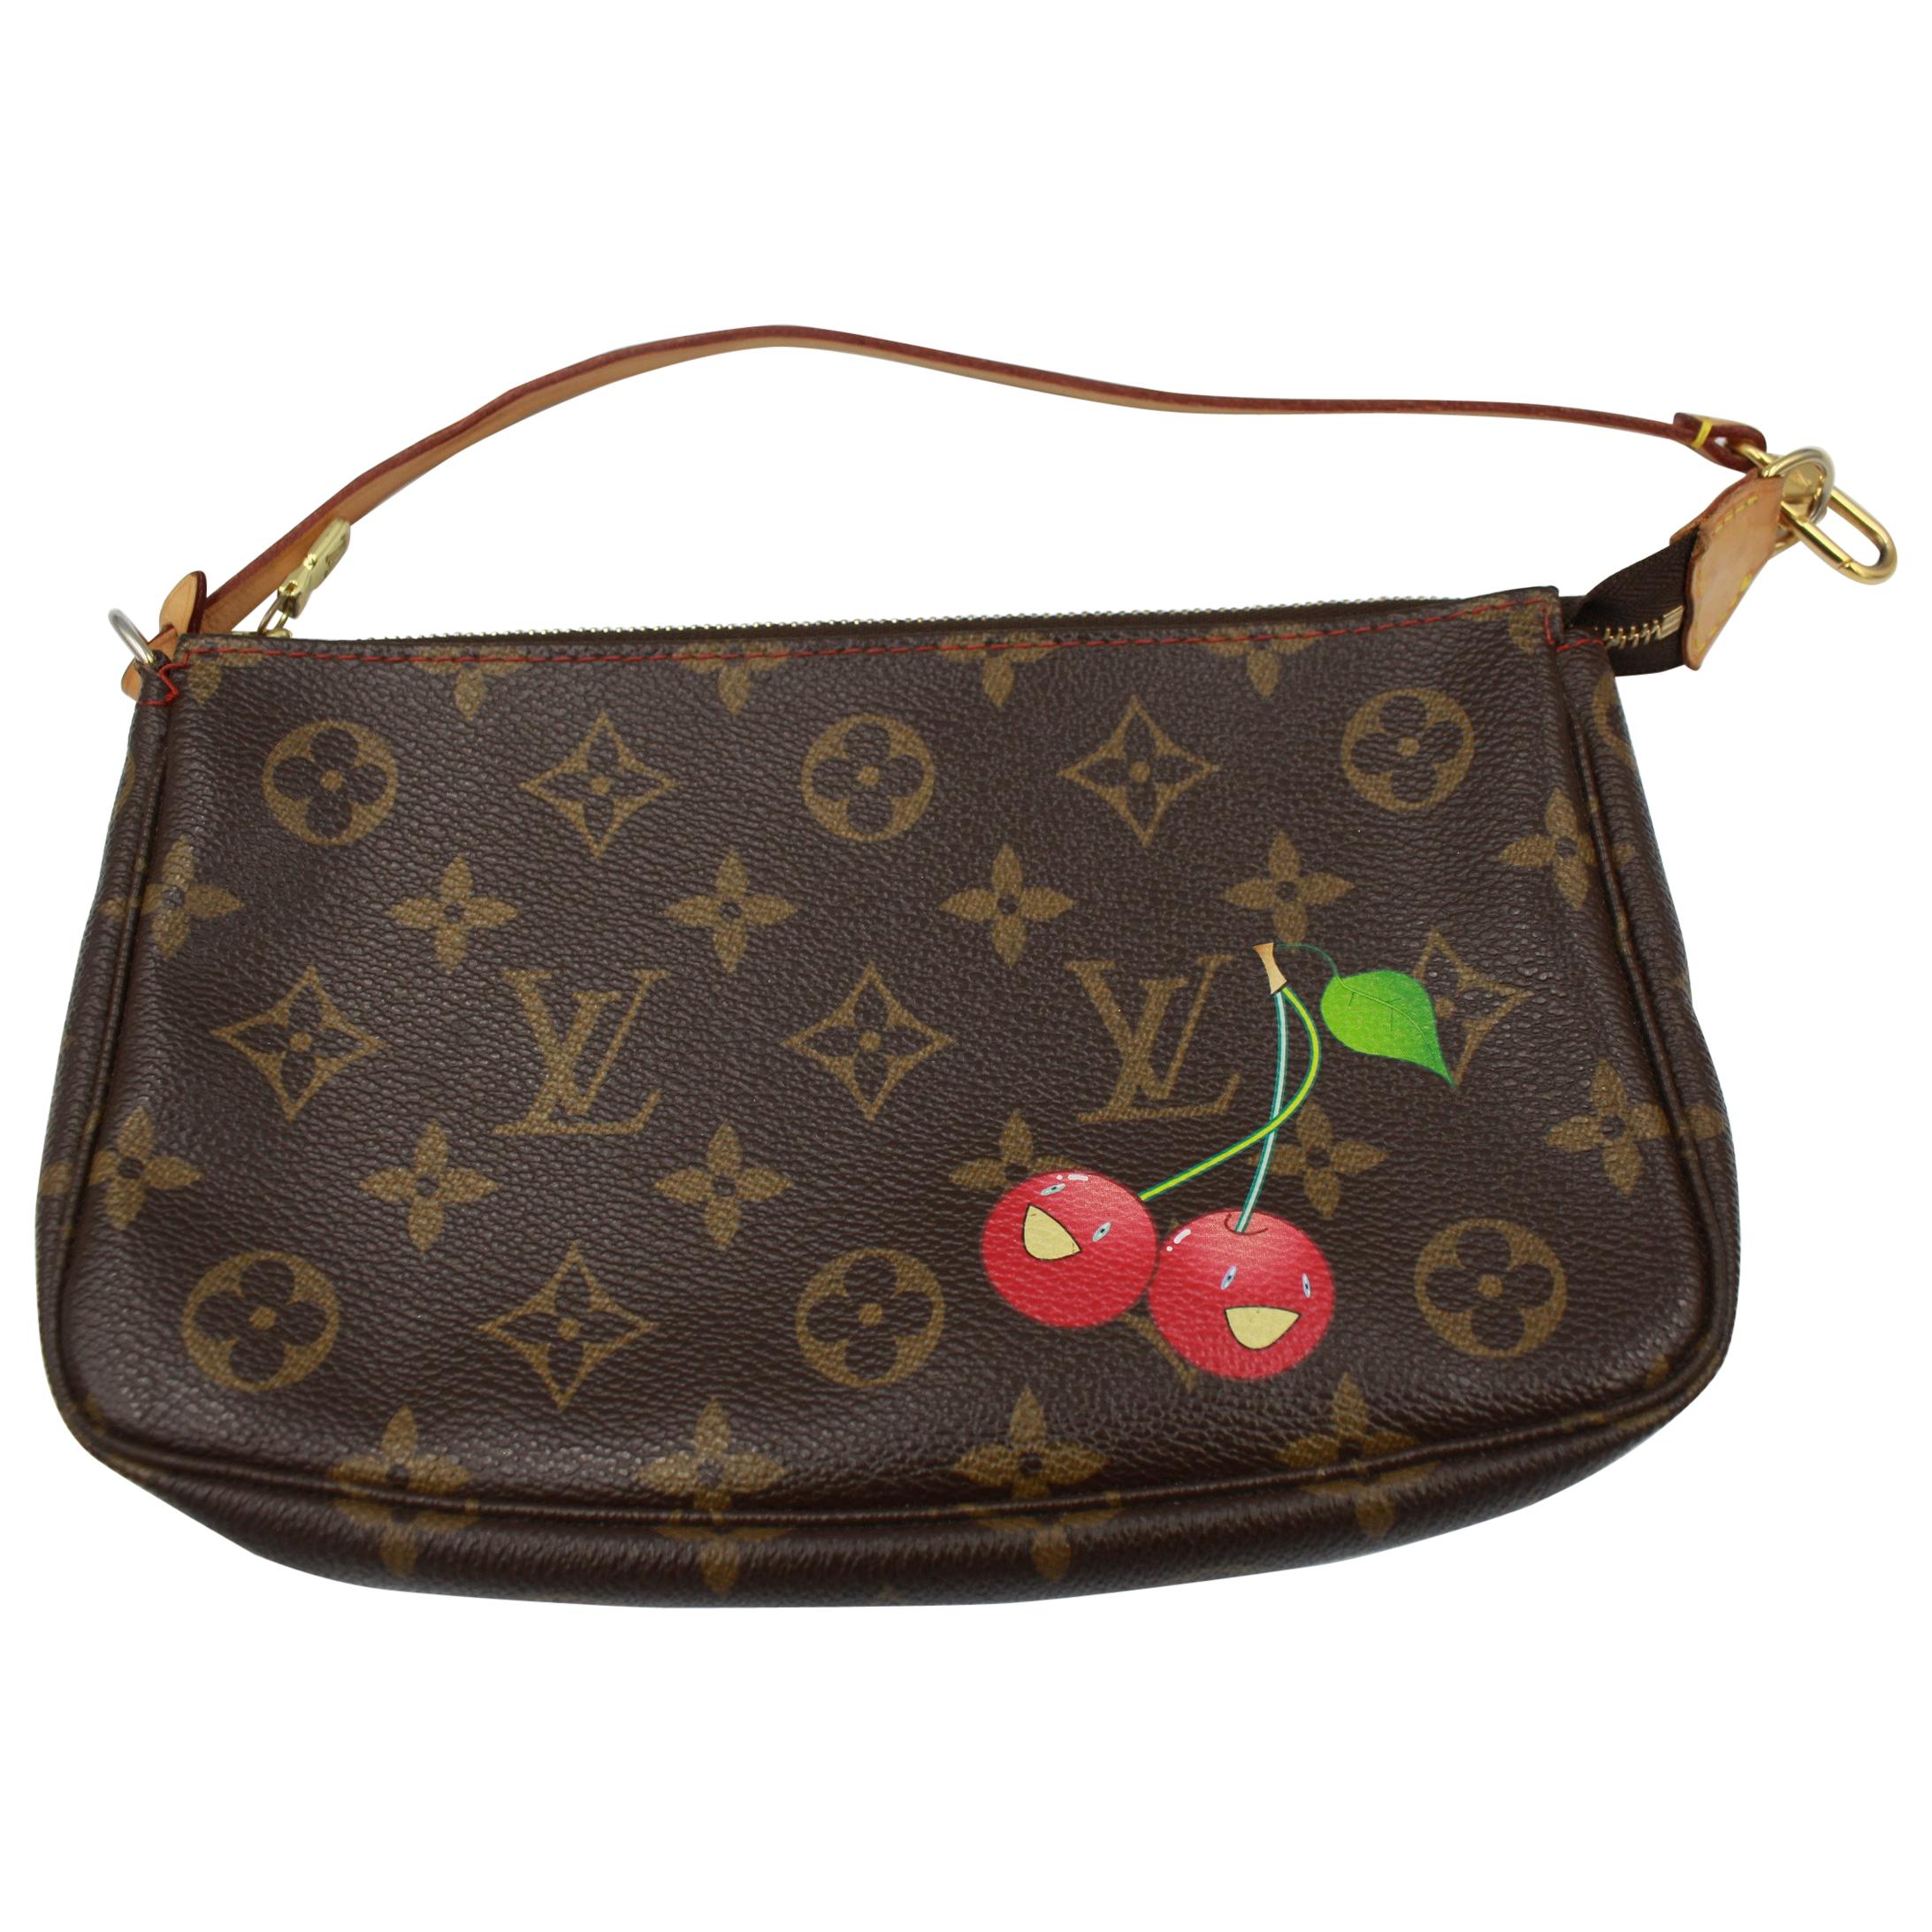 Louis Vuitton Cherry by Takashi Murakami Clutch Bag